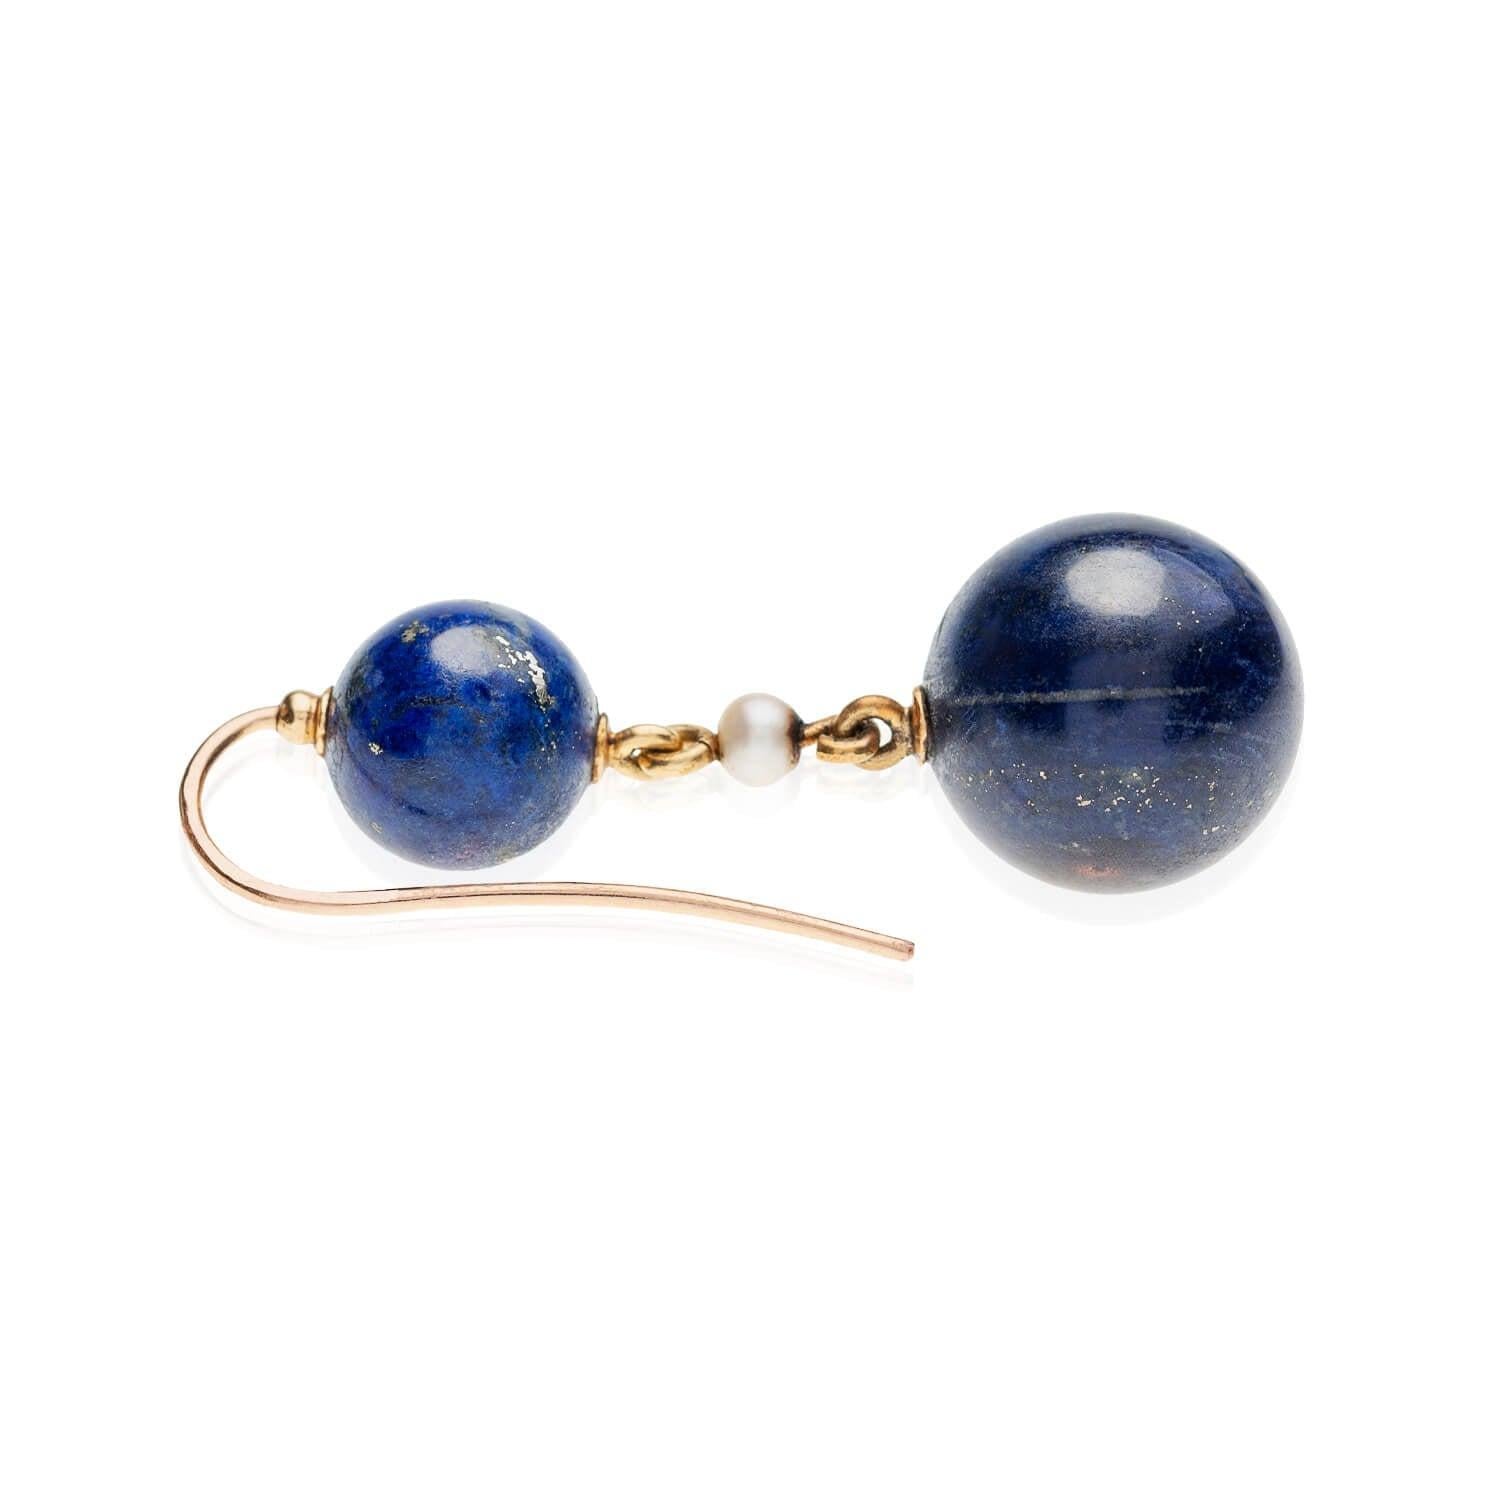 Cabochon Victorian Pearl, Enamel + Carved Lapis Lazuli Earrings, Pendant + Button Set For Sale